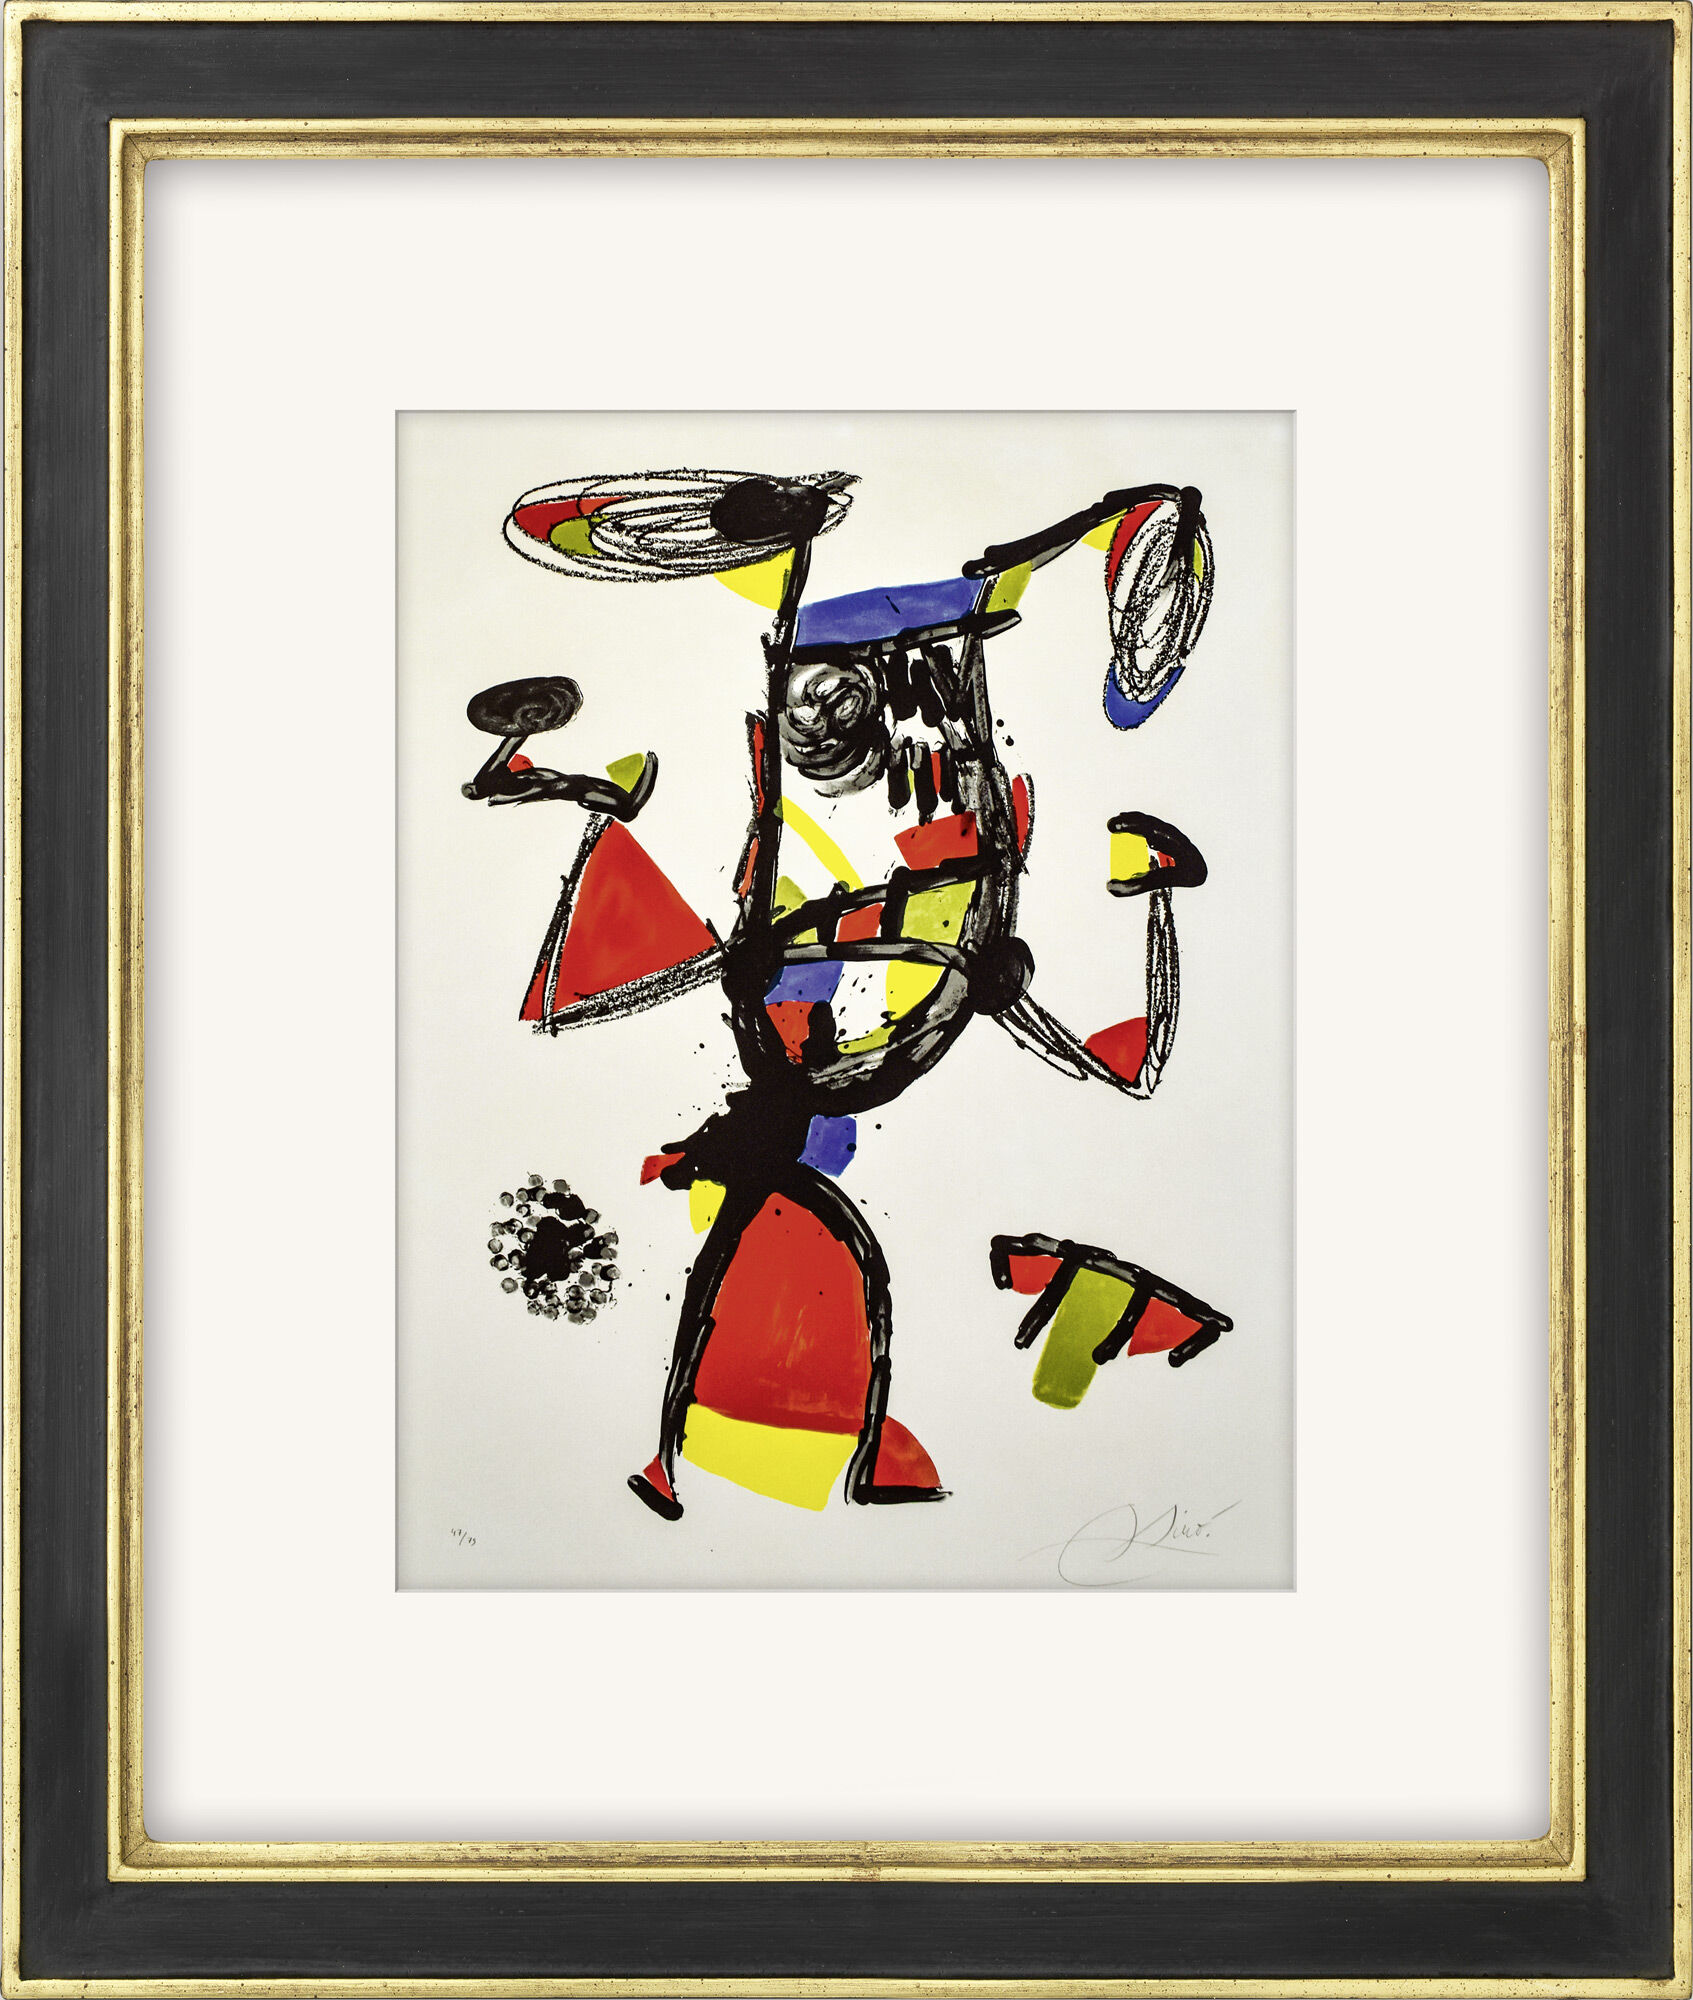 Picture "Majorette (Cheerleader)" (1978) by Joan Miró